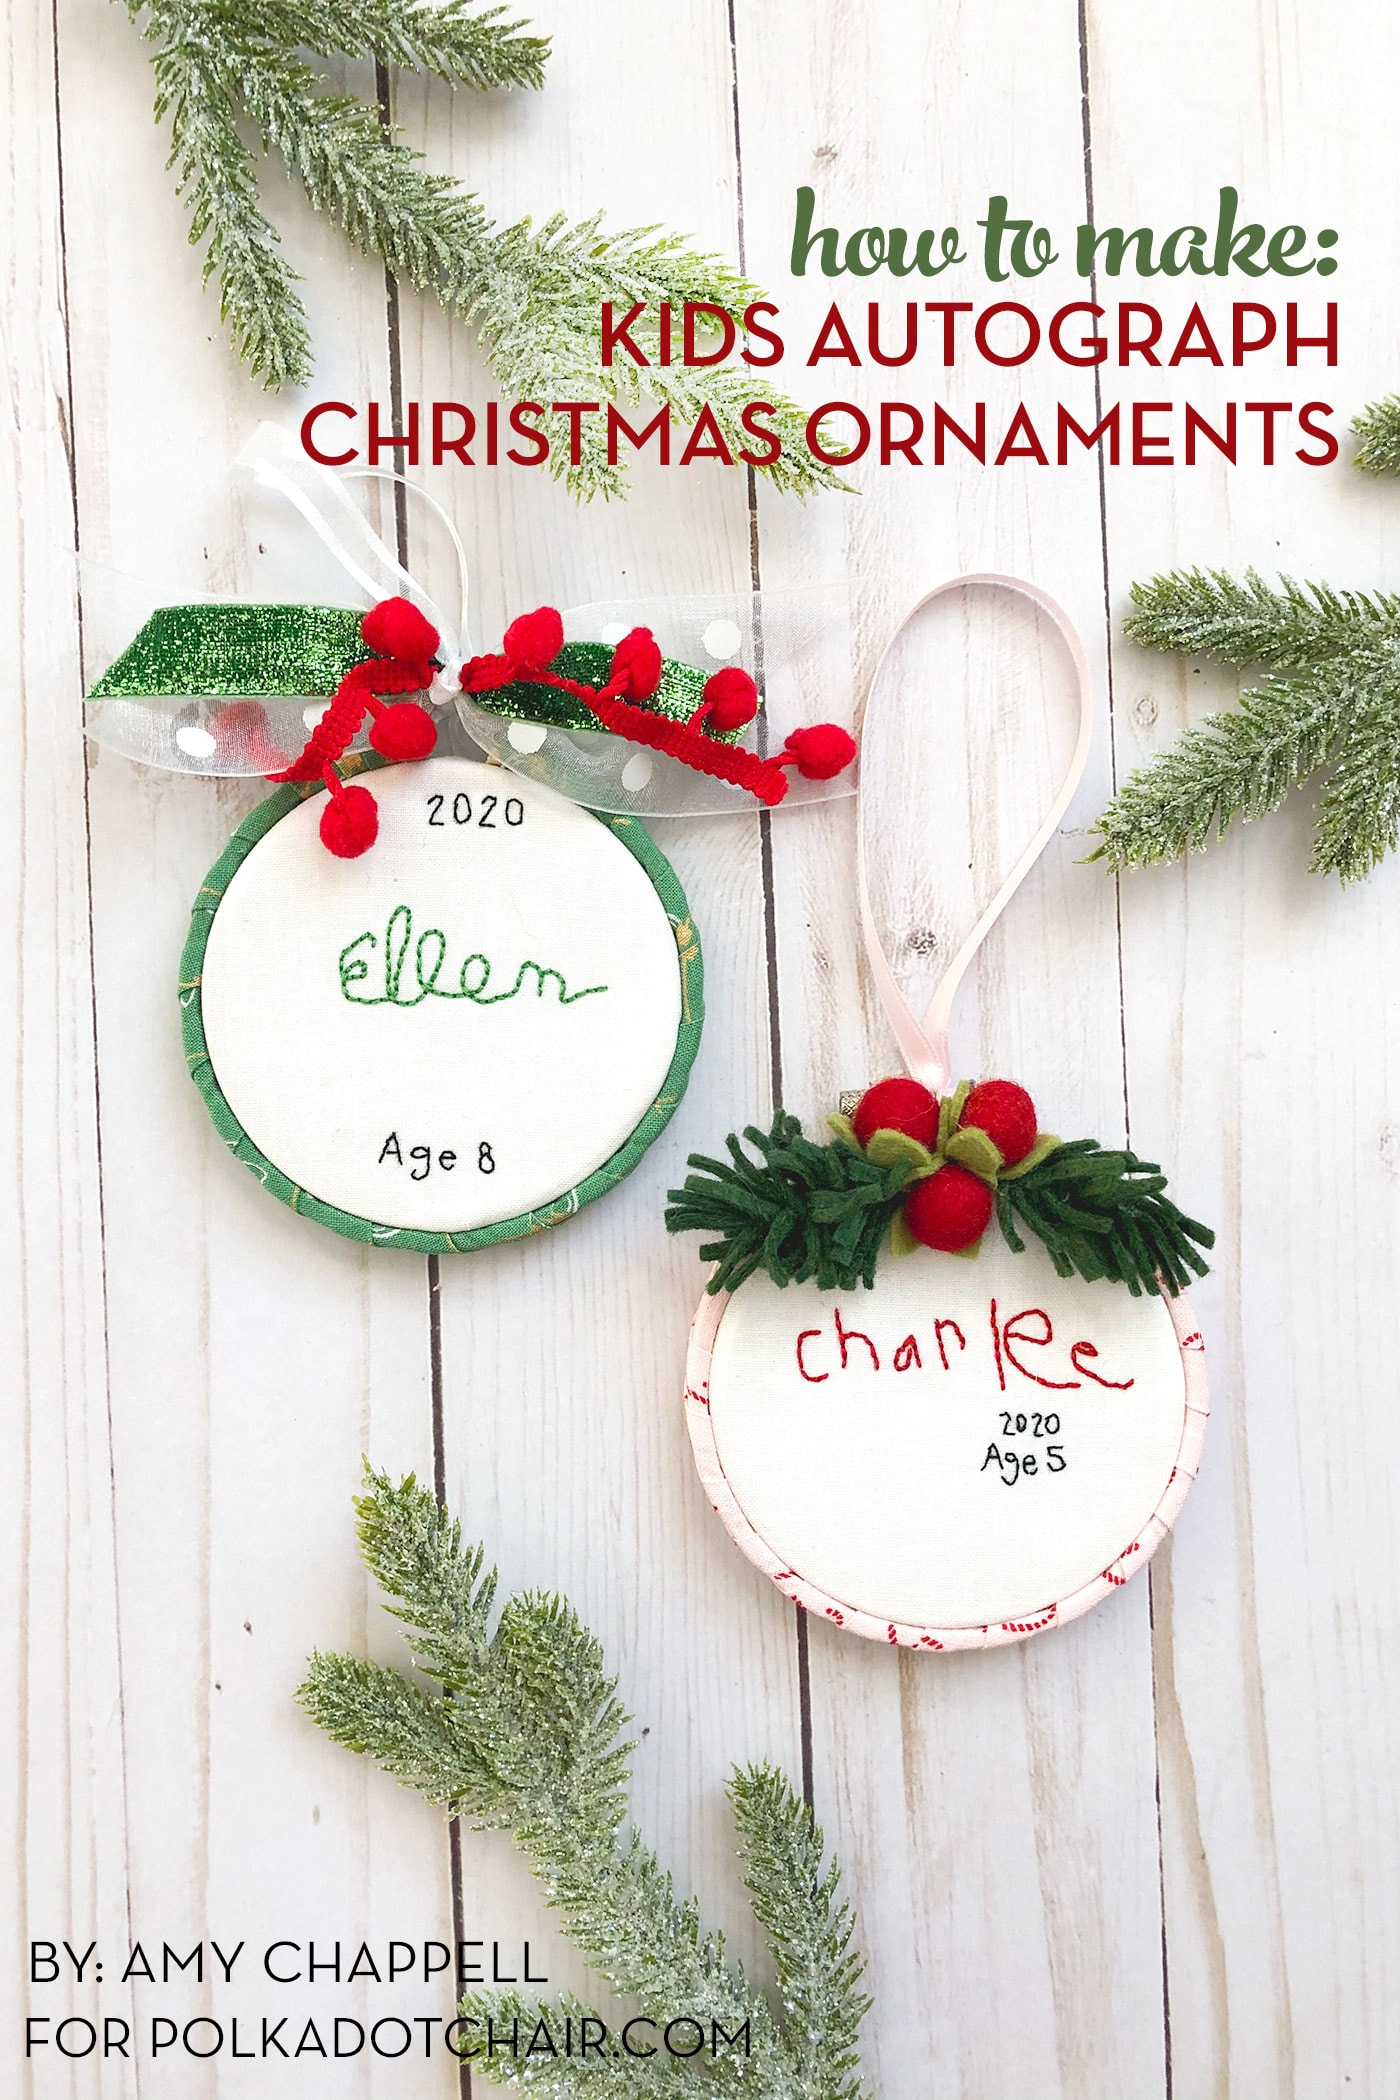 https://www.polkadotchair.com/wp-content/uploads/2020/10/how-to-make-kids-autograph-christmas-ornaments.jpg